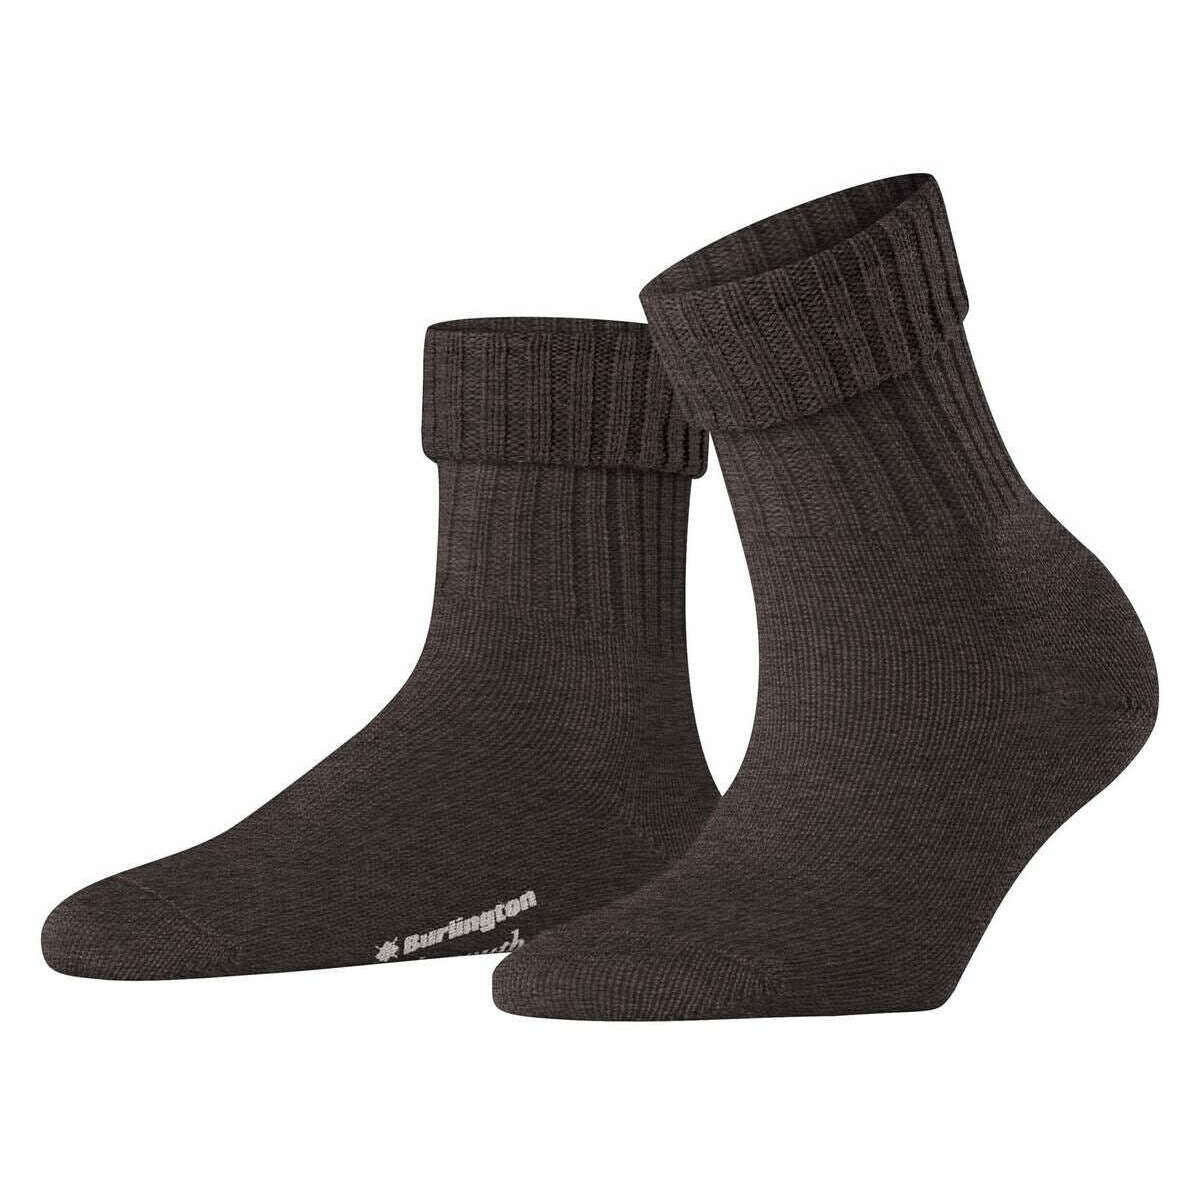 Burlington Plymouth Socks - Dark Brown